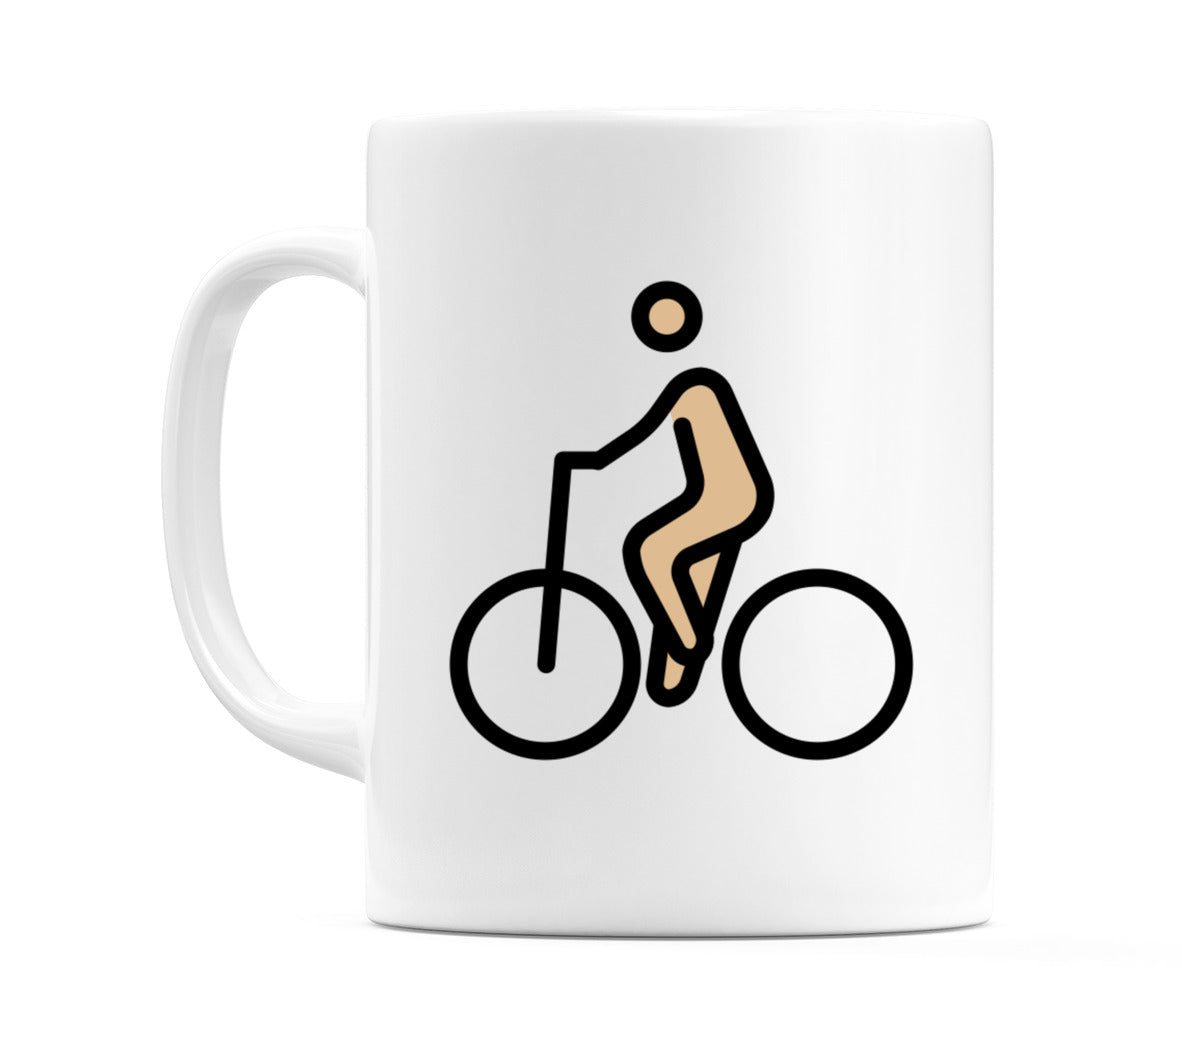 Male Biking: Medium-Light Skin Tone Emoji Mug